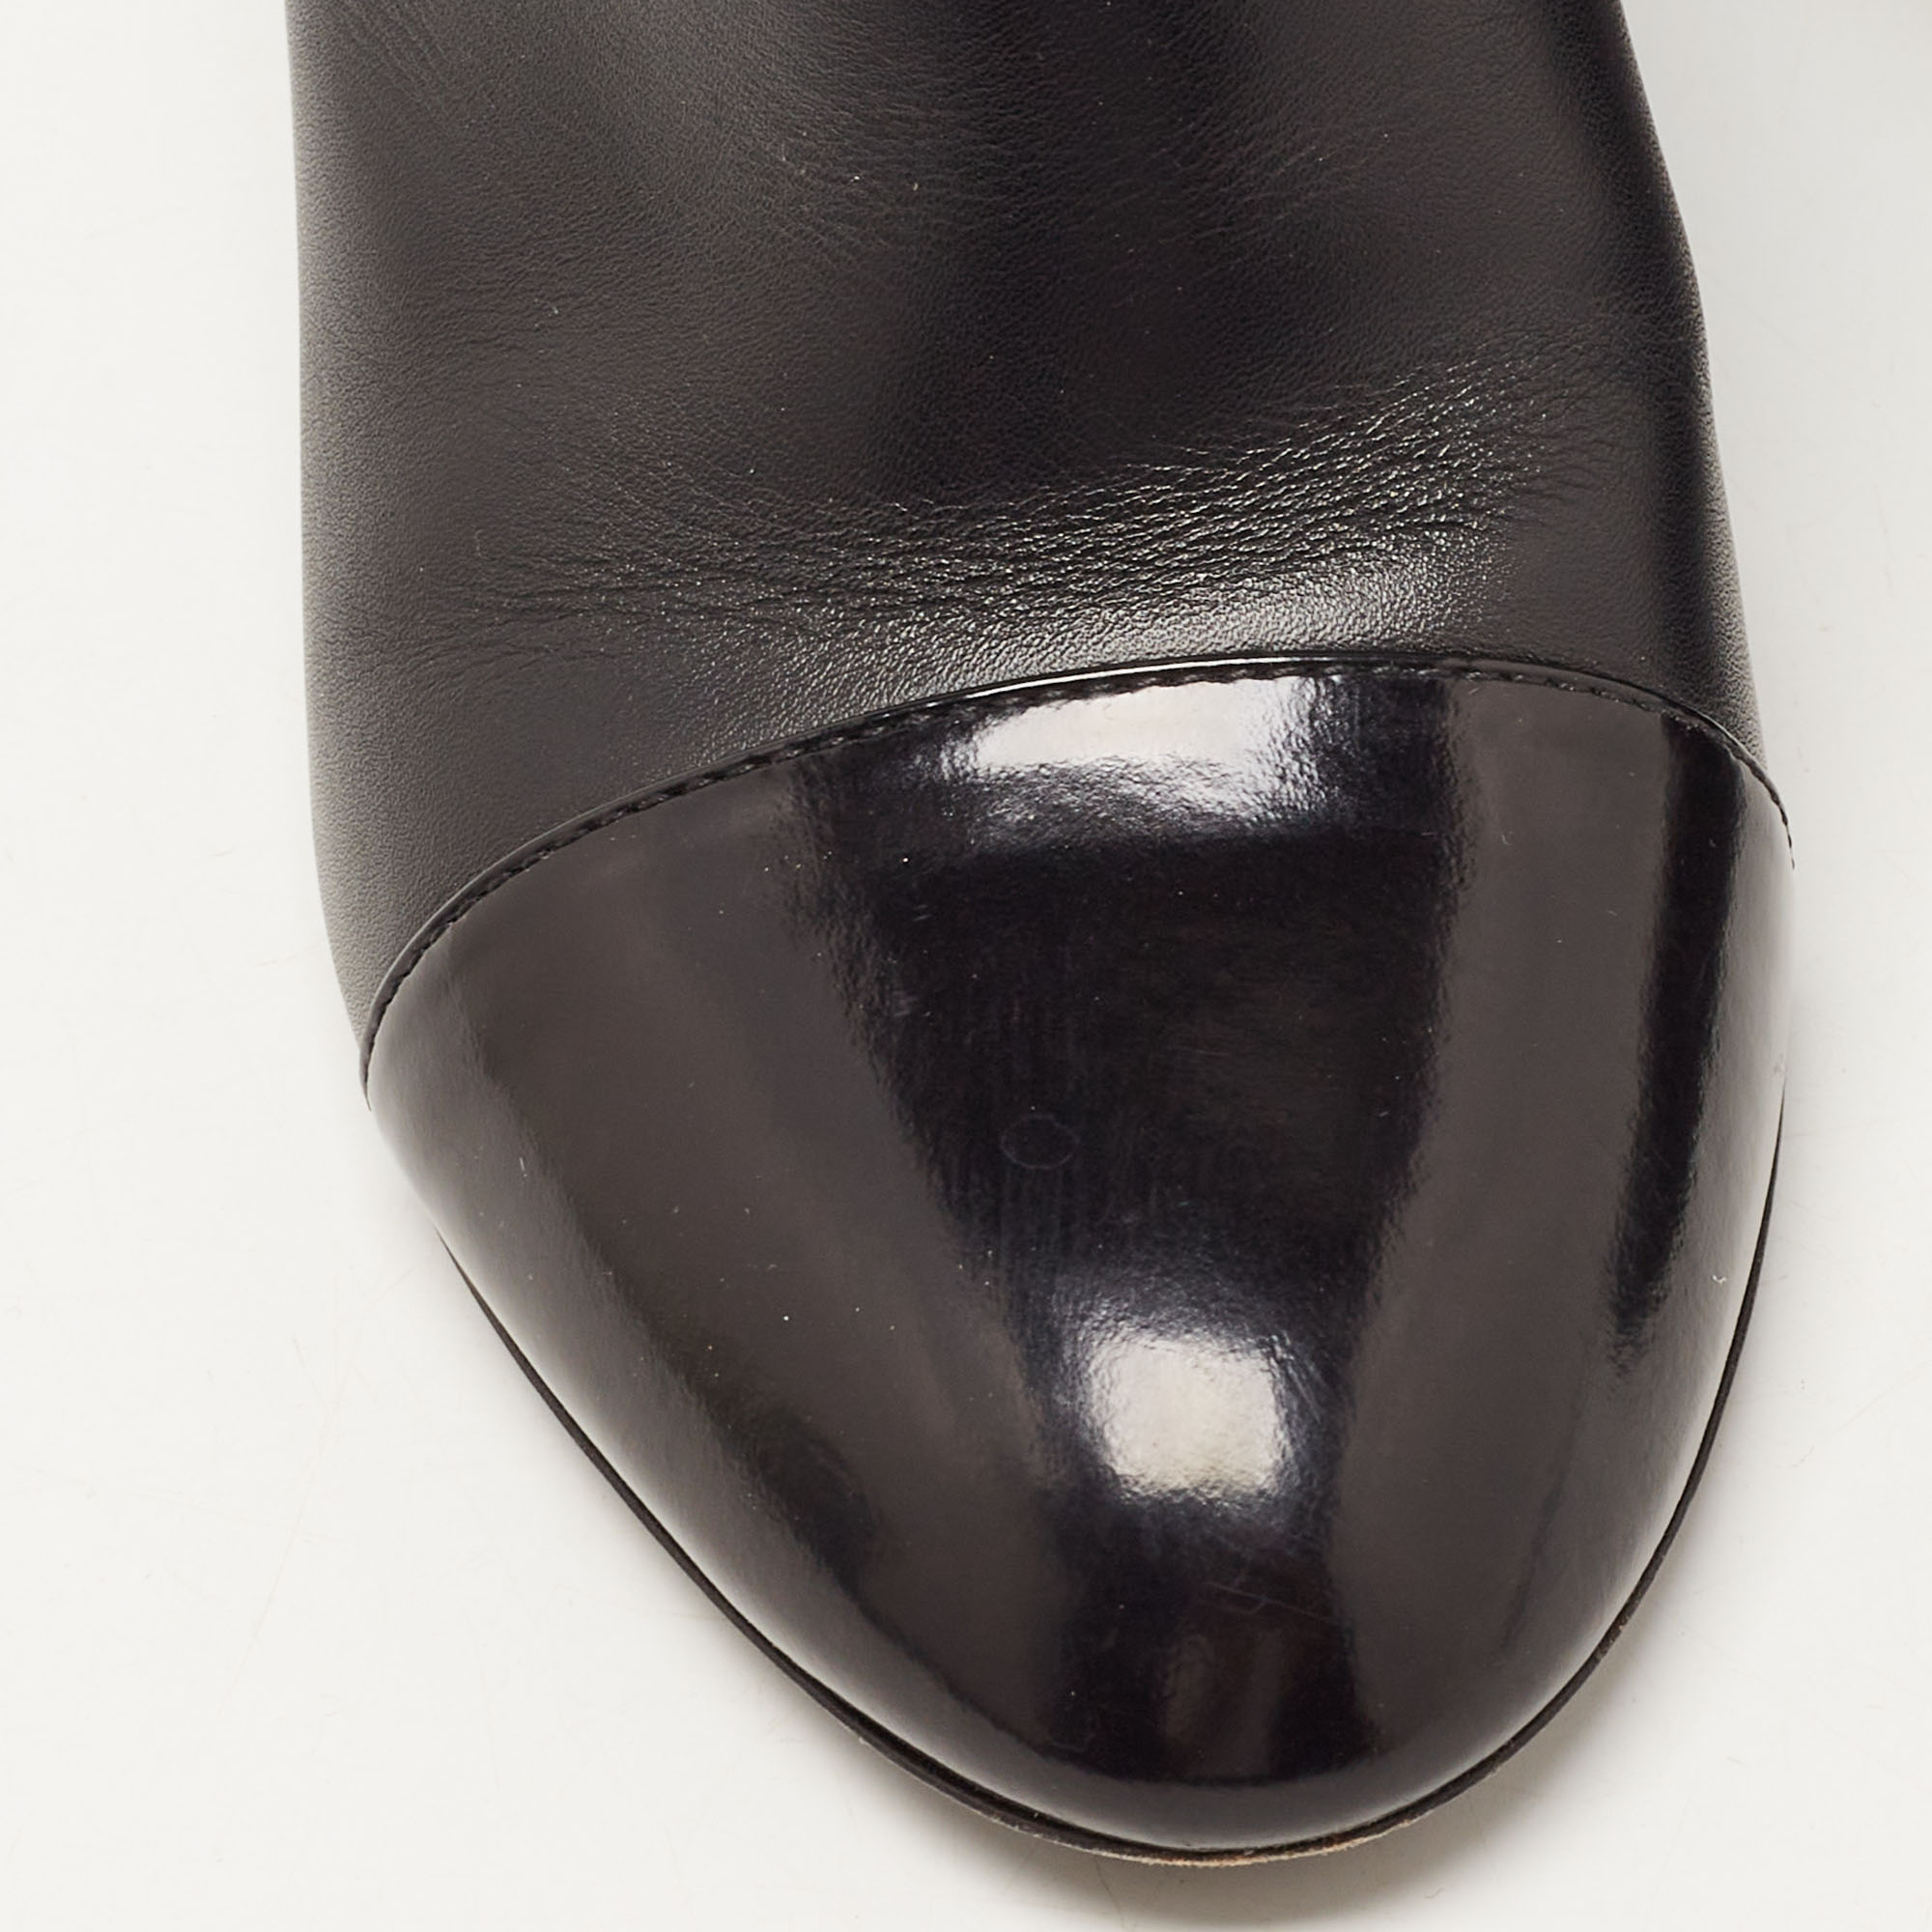 Louis Vuitton Black Leather Ankle Boots Size 35